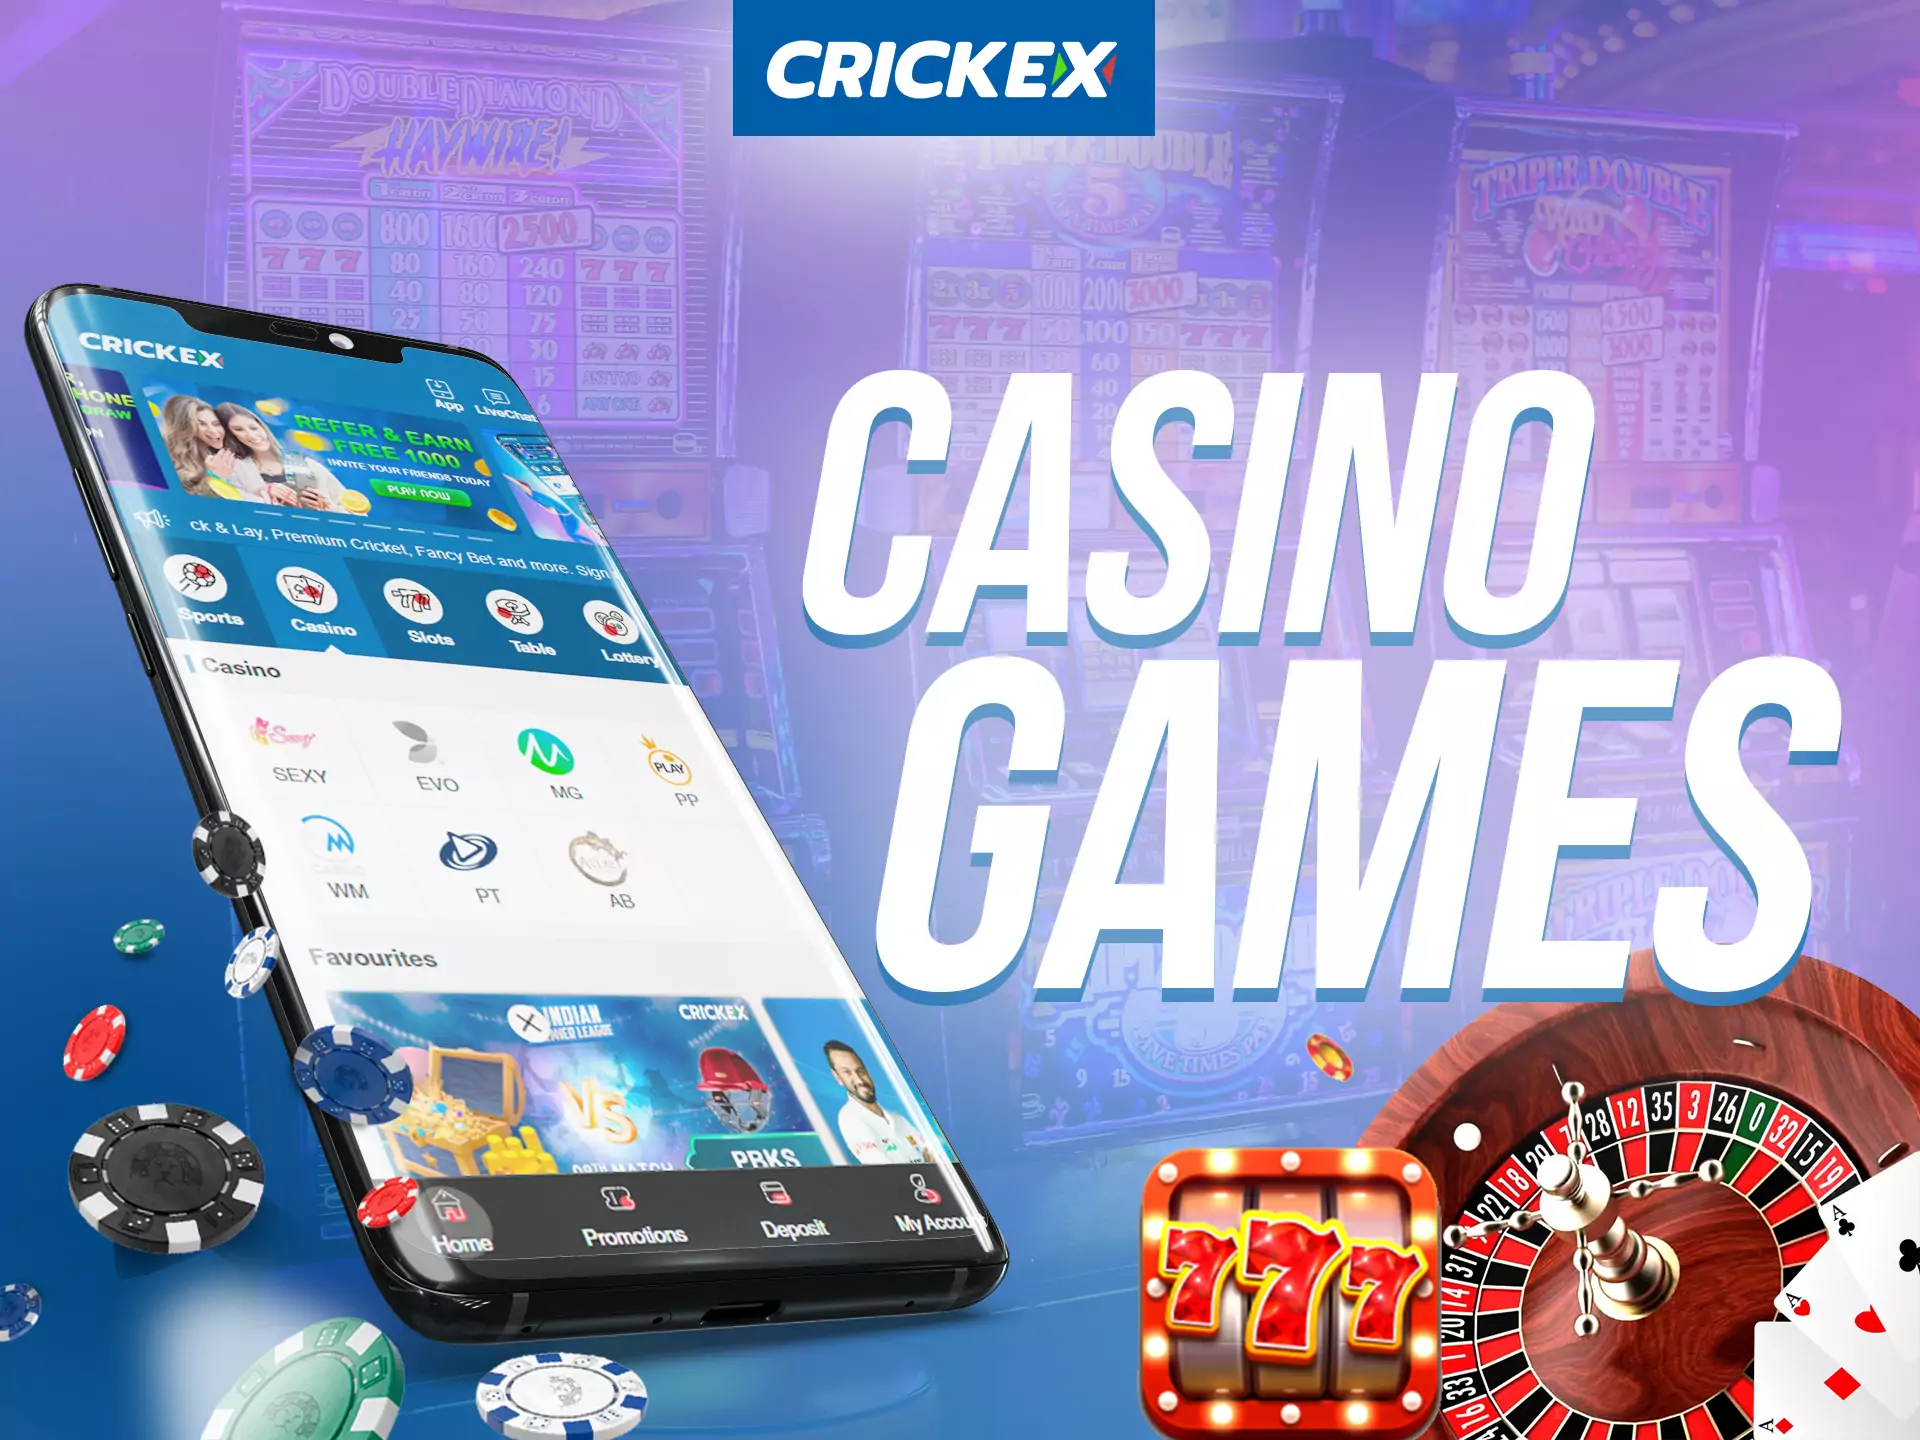 Play casino games on the Crickex app.